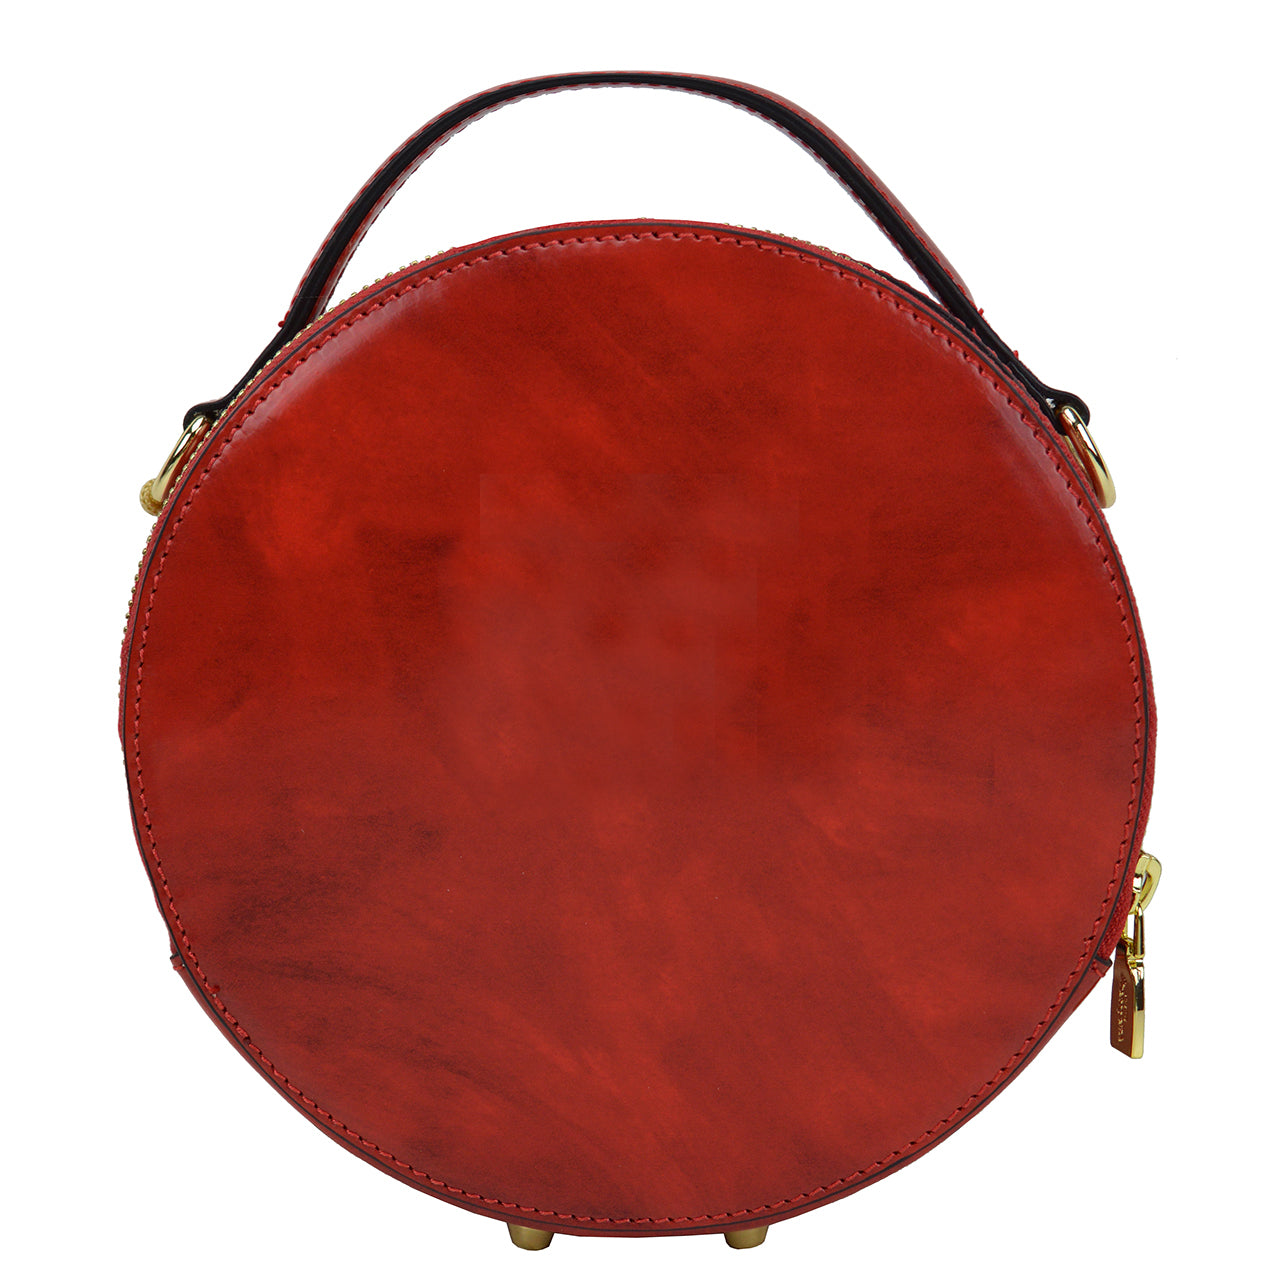 Pratesi Troghi R188 Tote Bag in genuine Italian leather